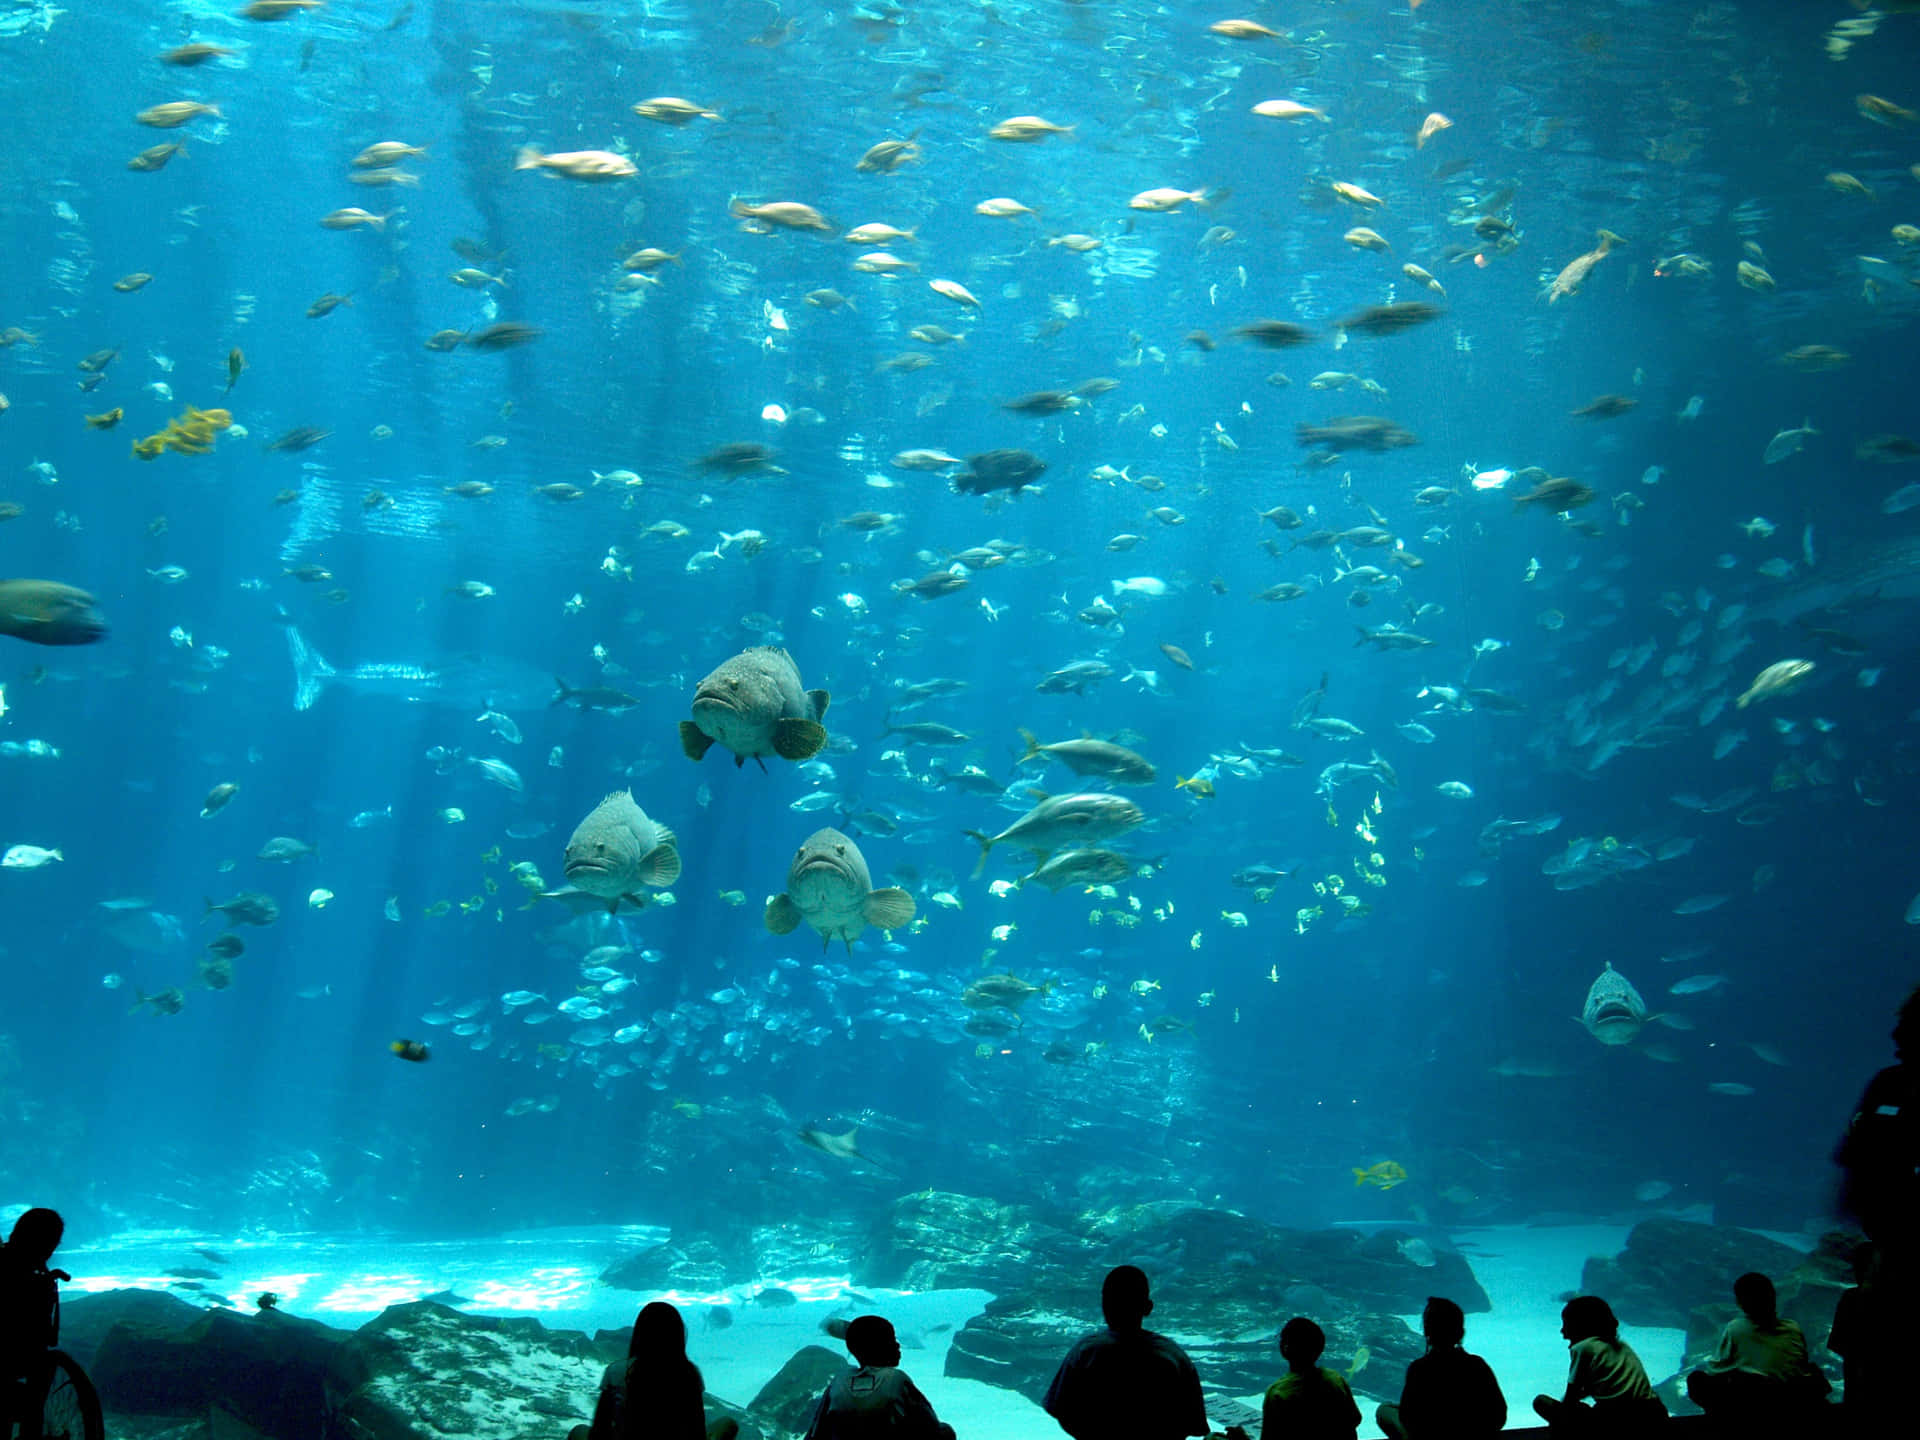 Submerging into beauty of the aquarium.